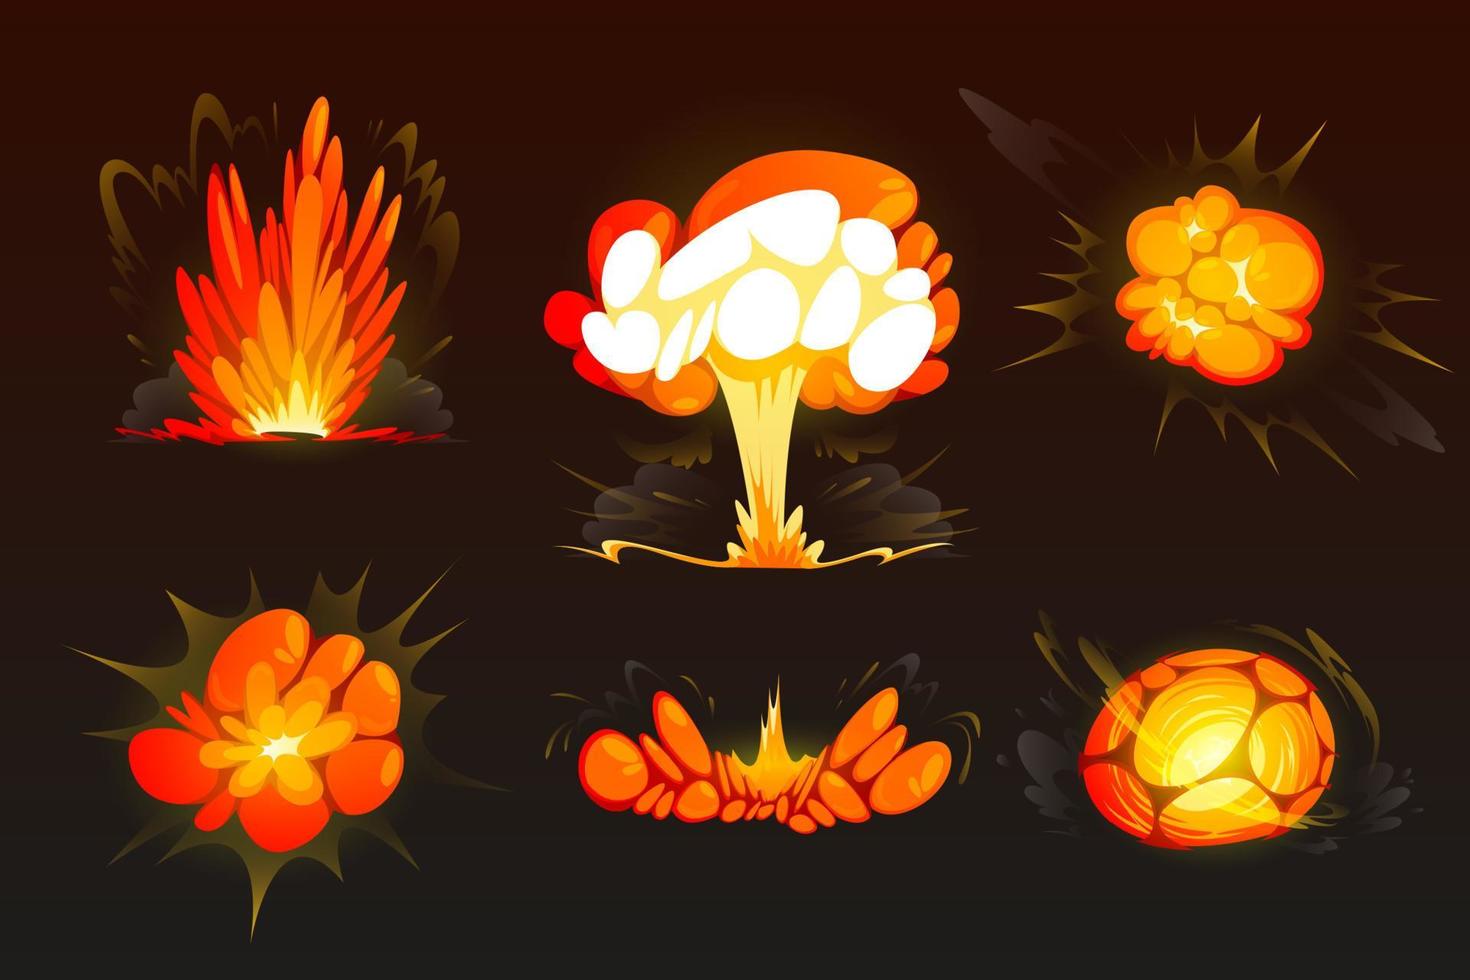 tekenfilm bom explosie set. wolken, boom effect vector